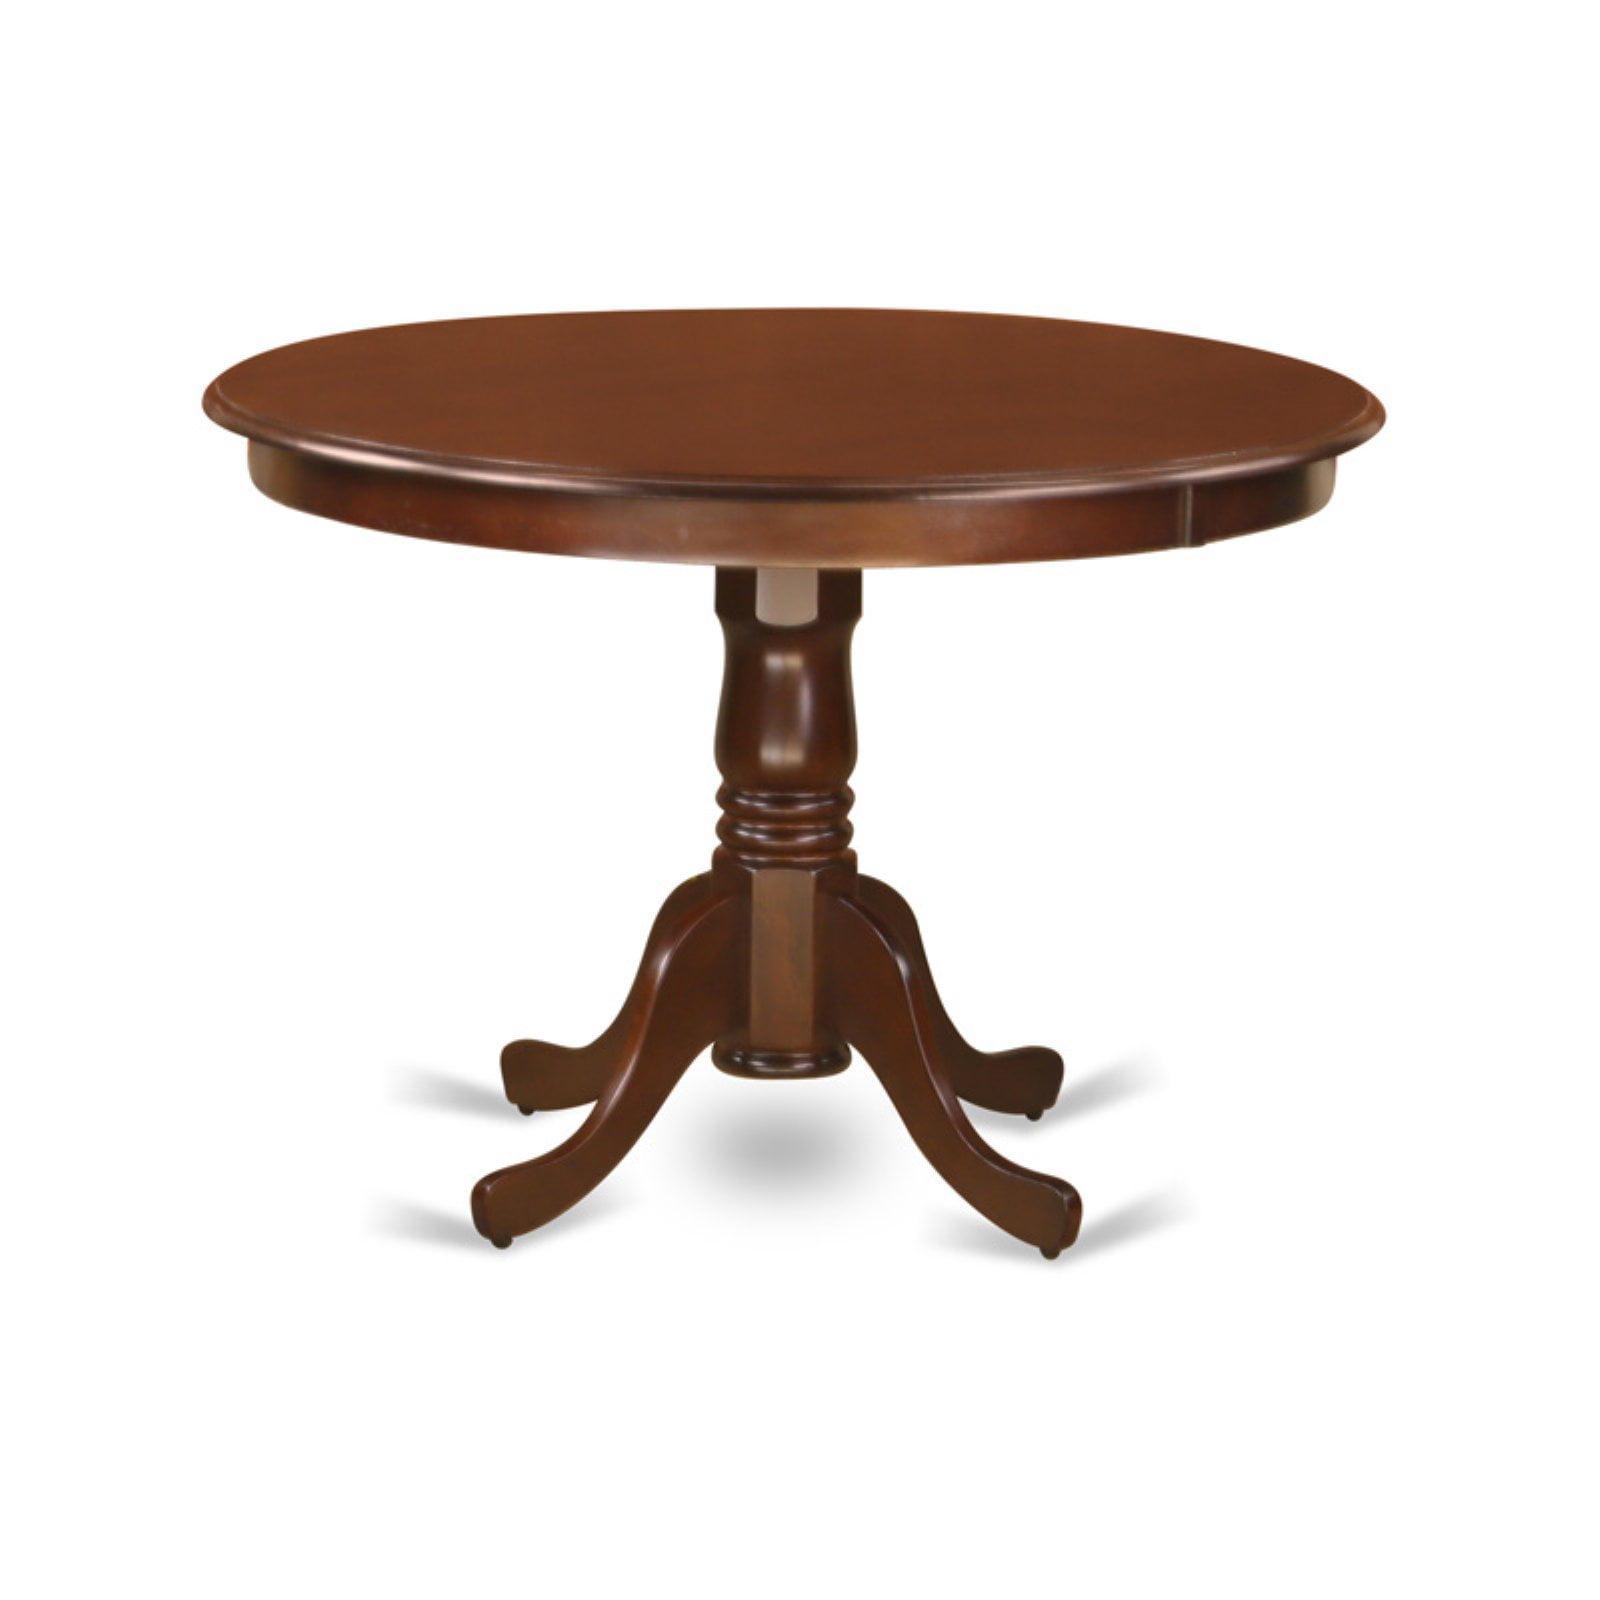 Elegant Mahogany Wood Round Dining Table with Pedestal Base, 42" Diameter